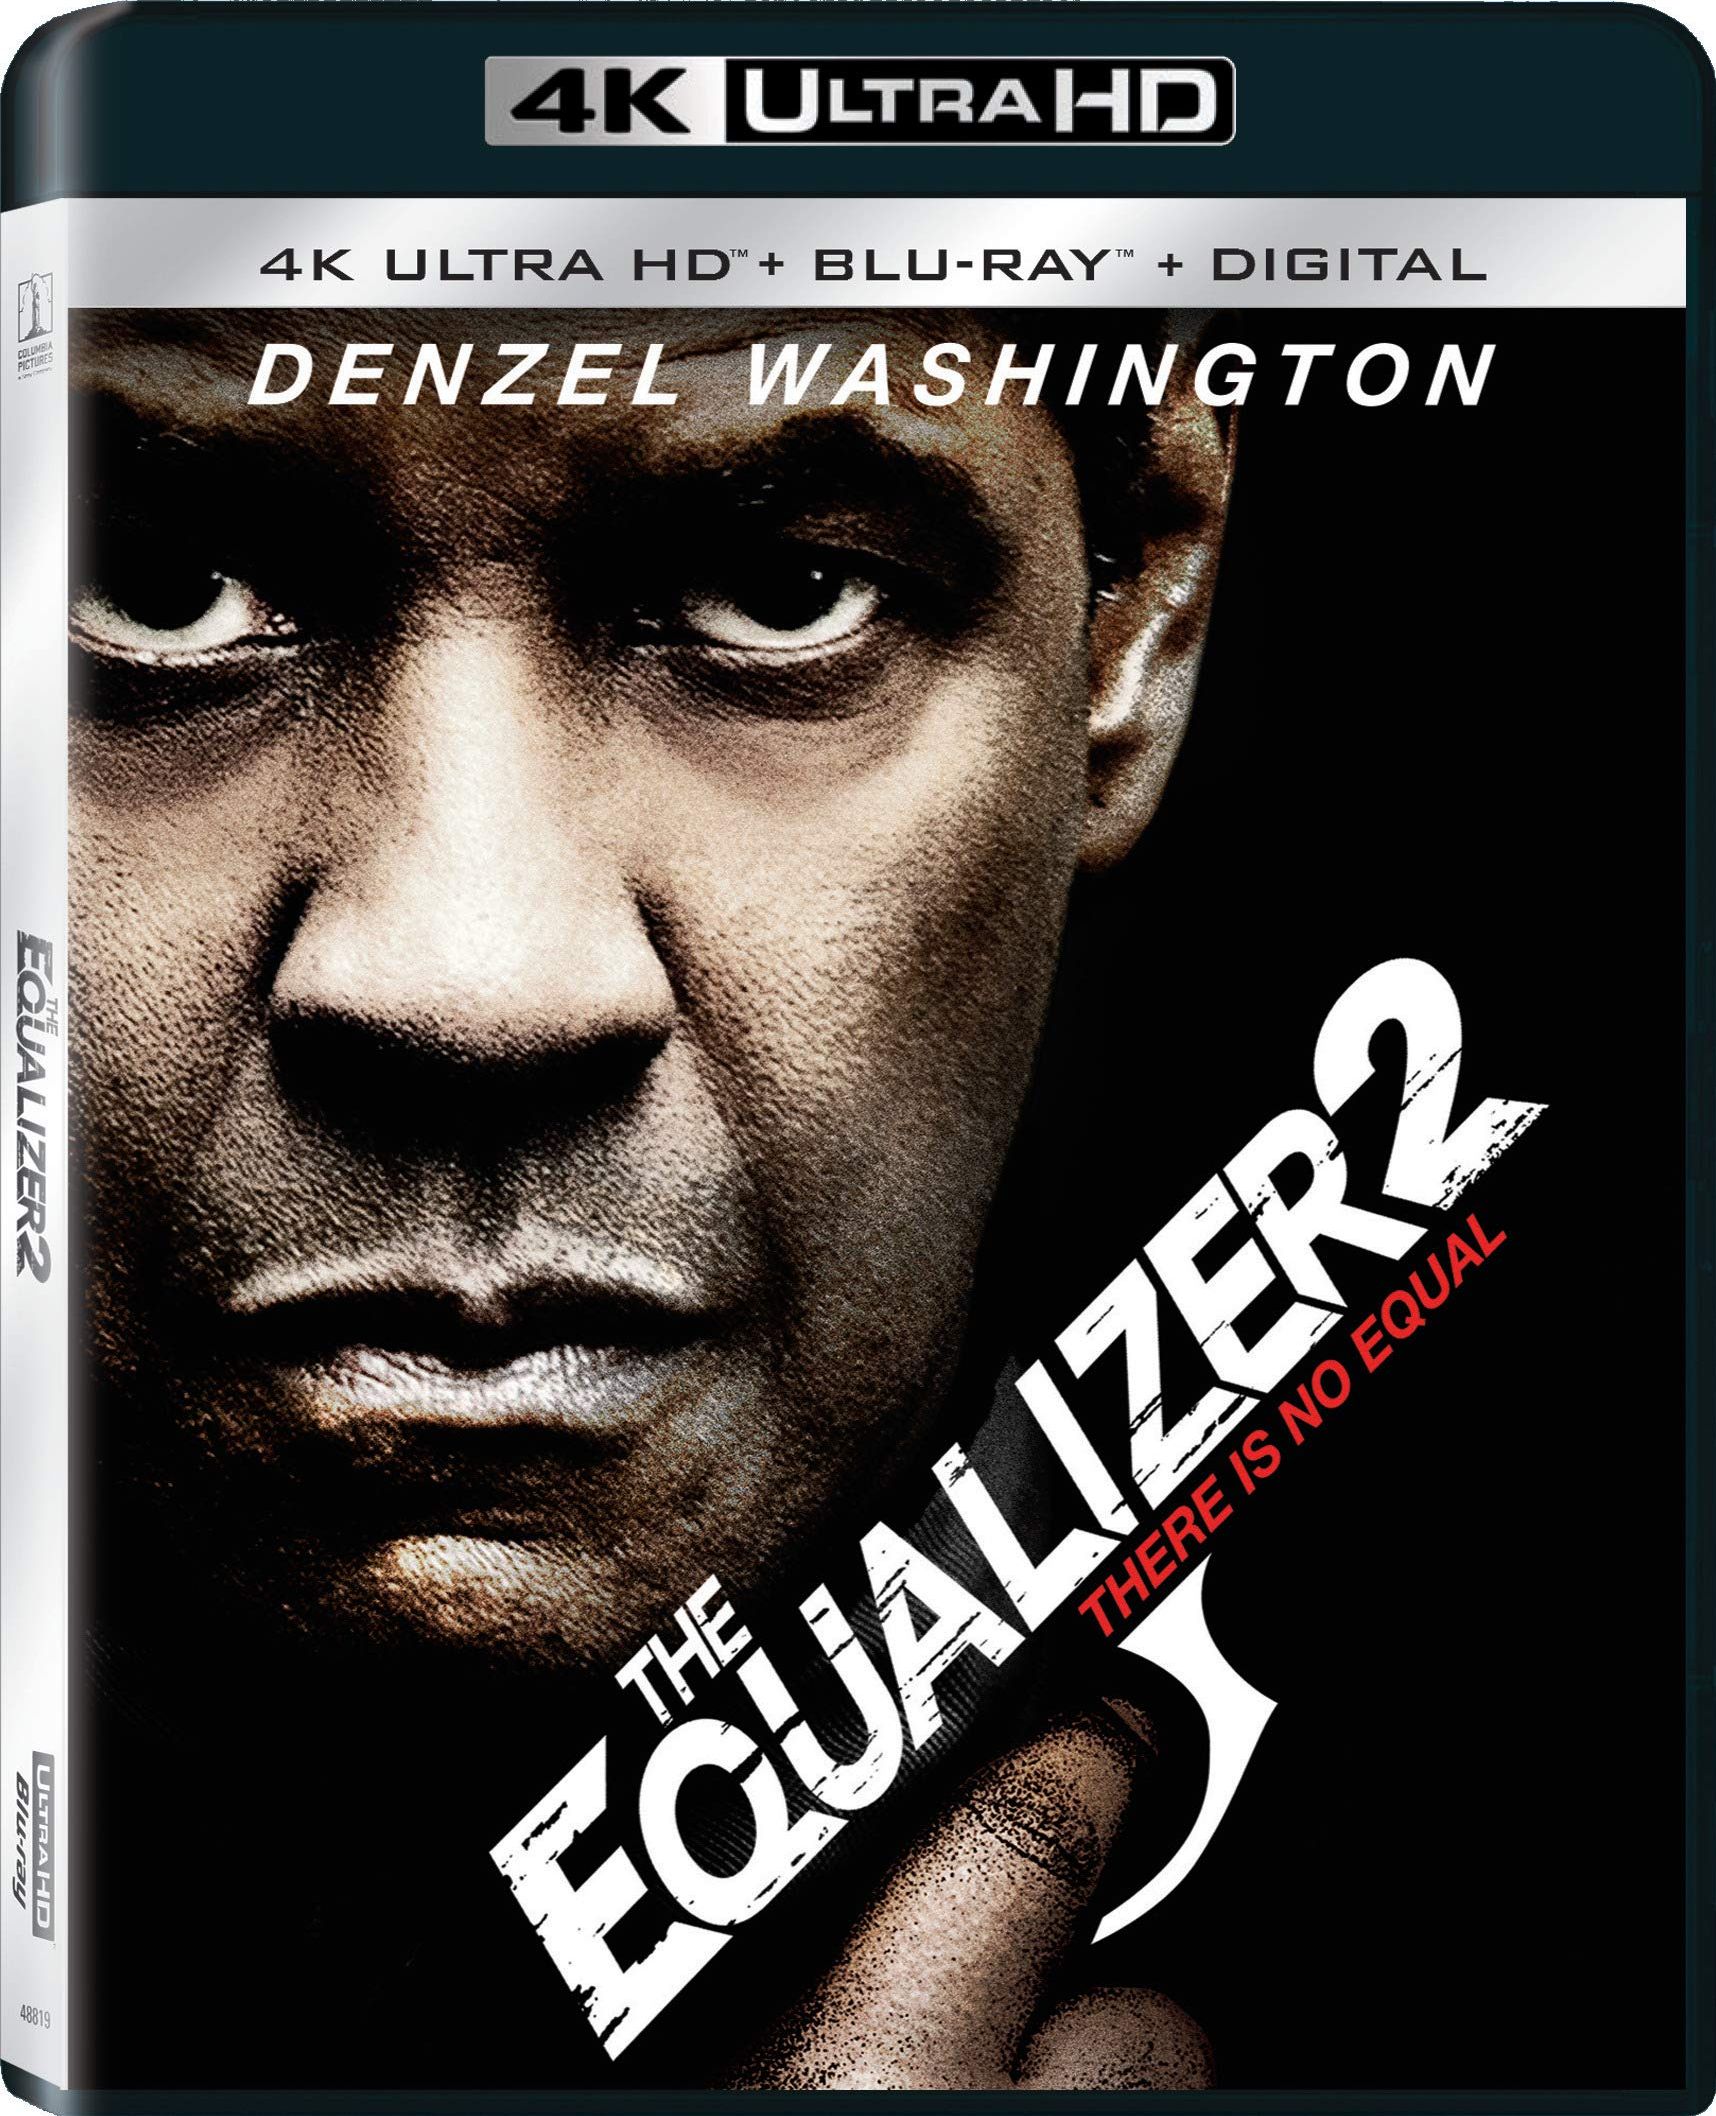 The Equalizer 2 (2018) - News - IMDb